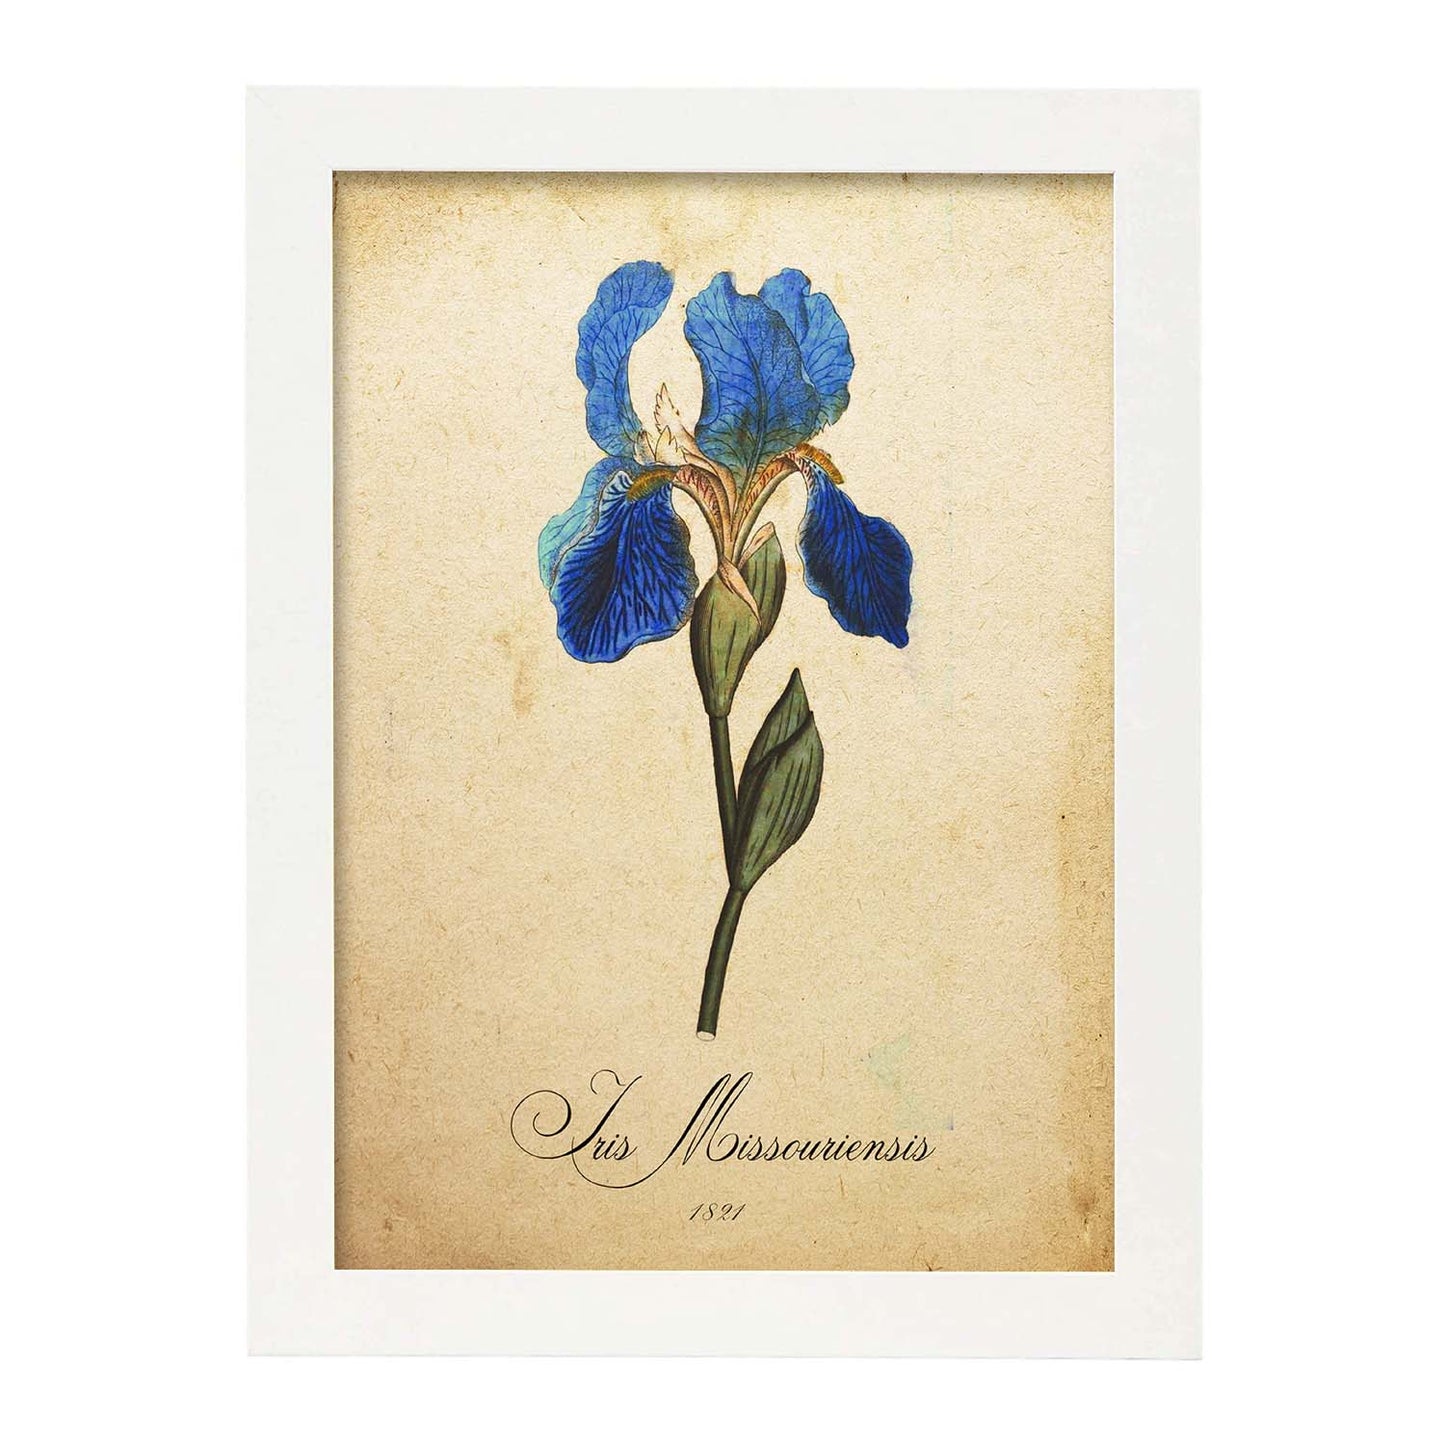 Poster de flores vintage. Lámina Iris missouriensis con diseño vintage.-Artwork-Nacnic-A4-Marco Blanco-Nacnic Estudio SL